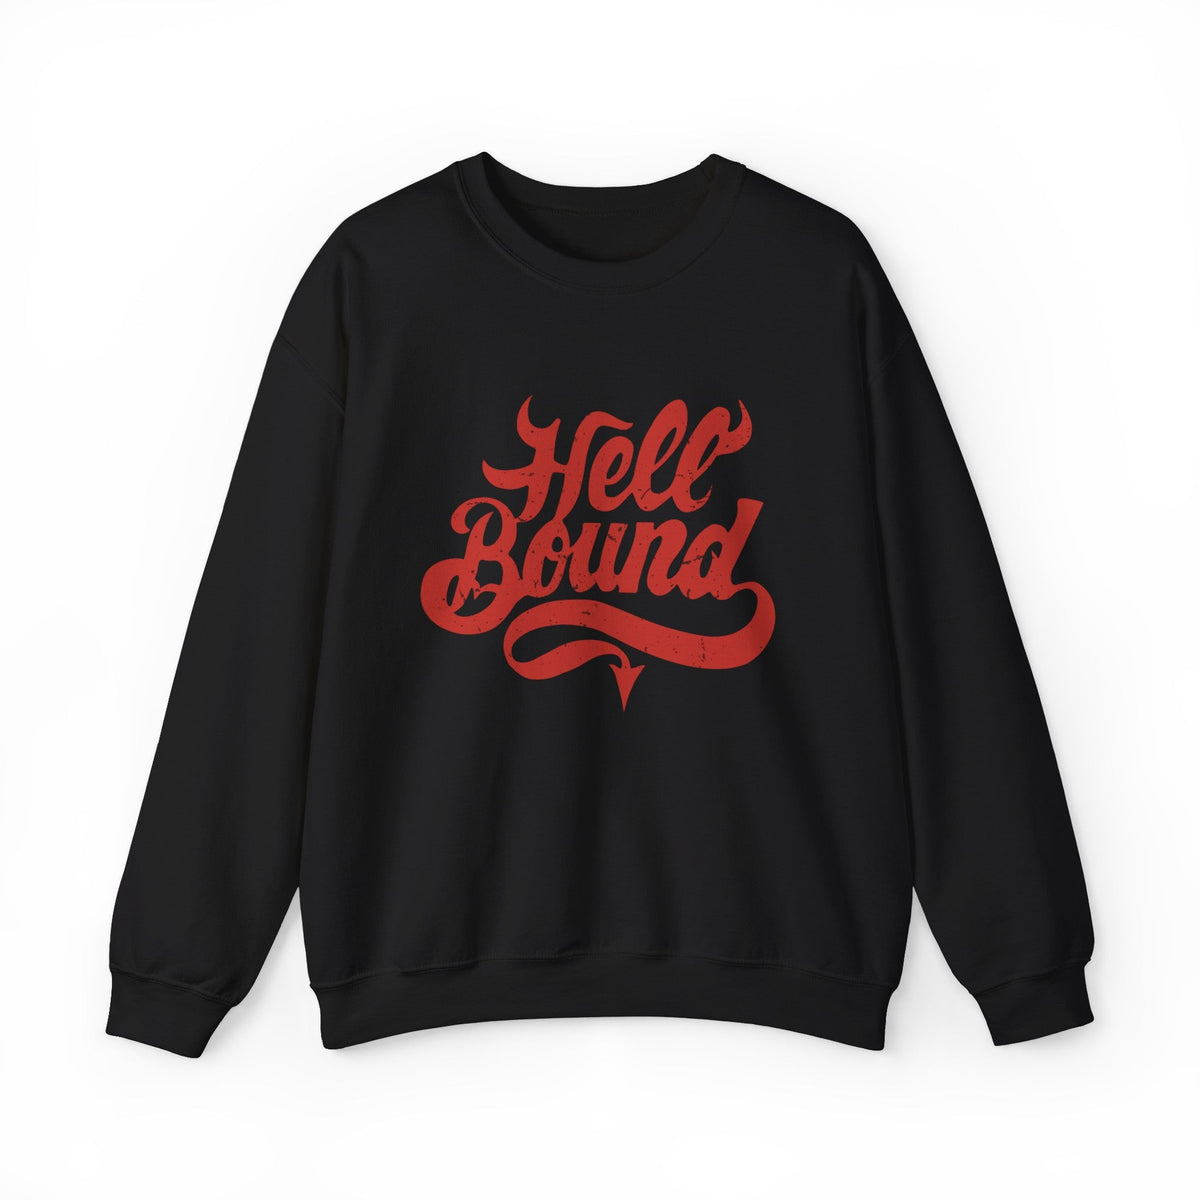 Hellbound Long Sleeve Crew Neck Sweatshirt - Goth Cloth Co.Sweatshirt33442885824387390845